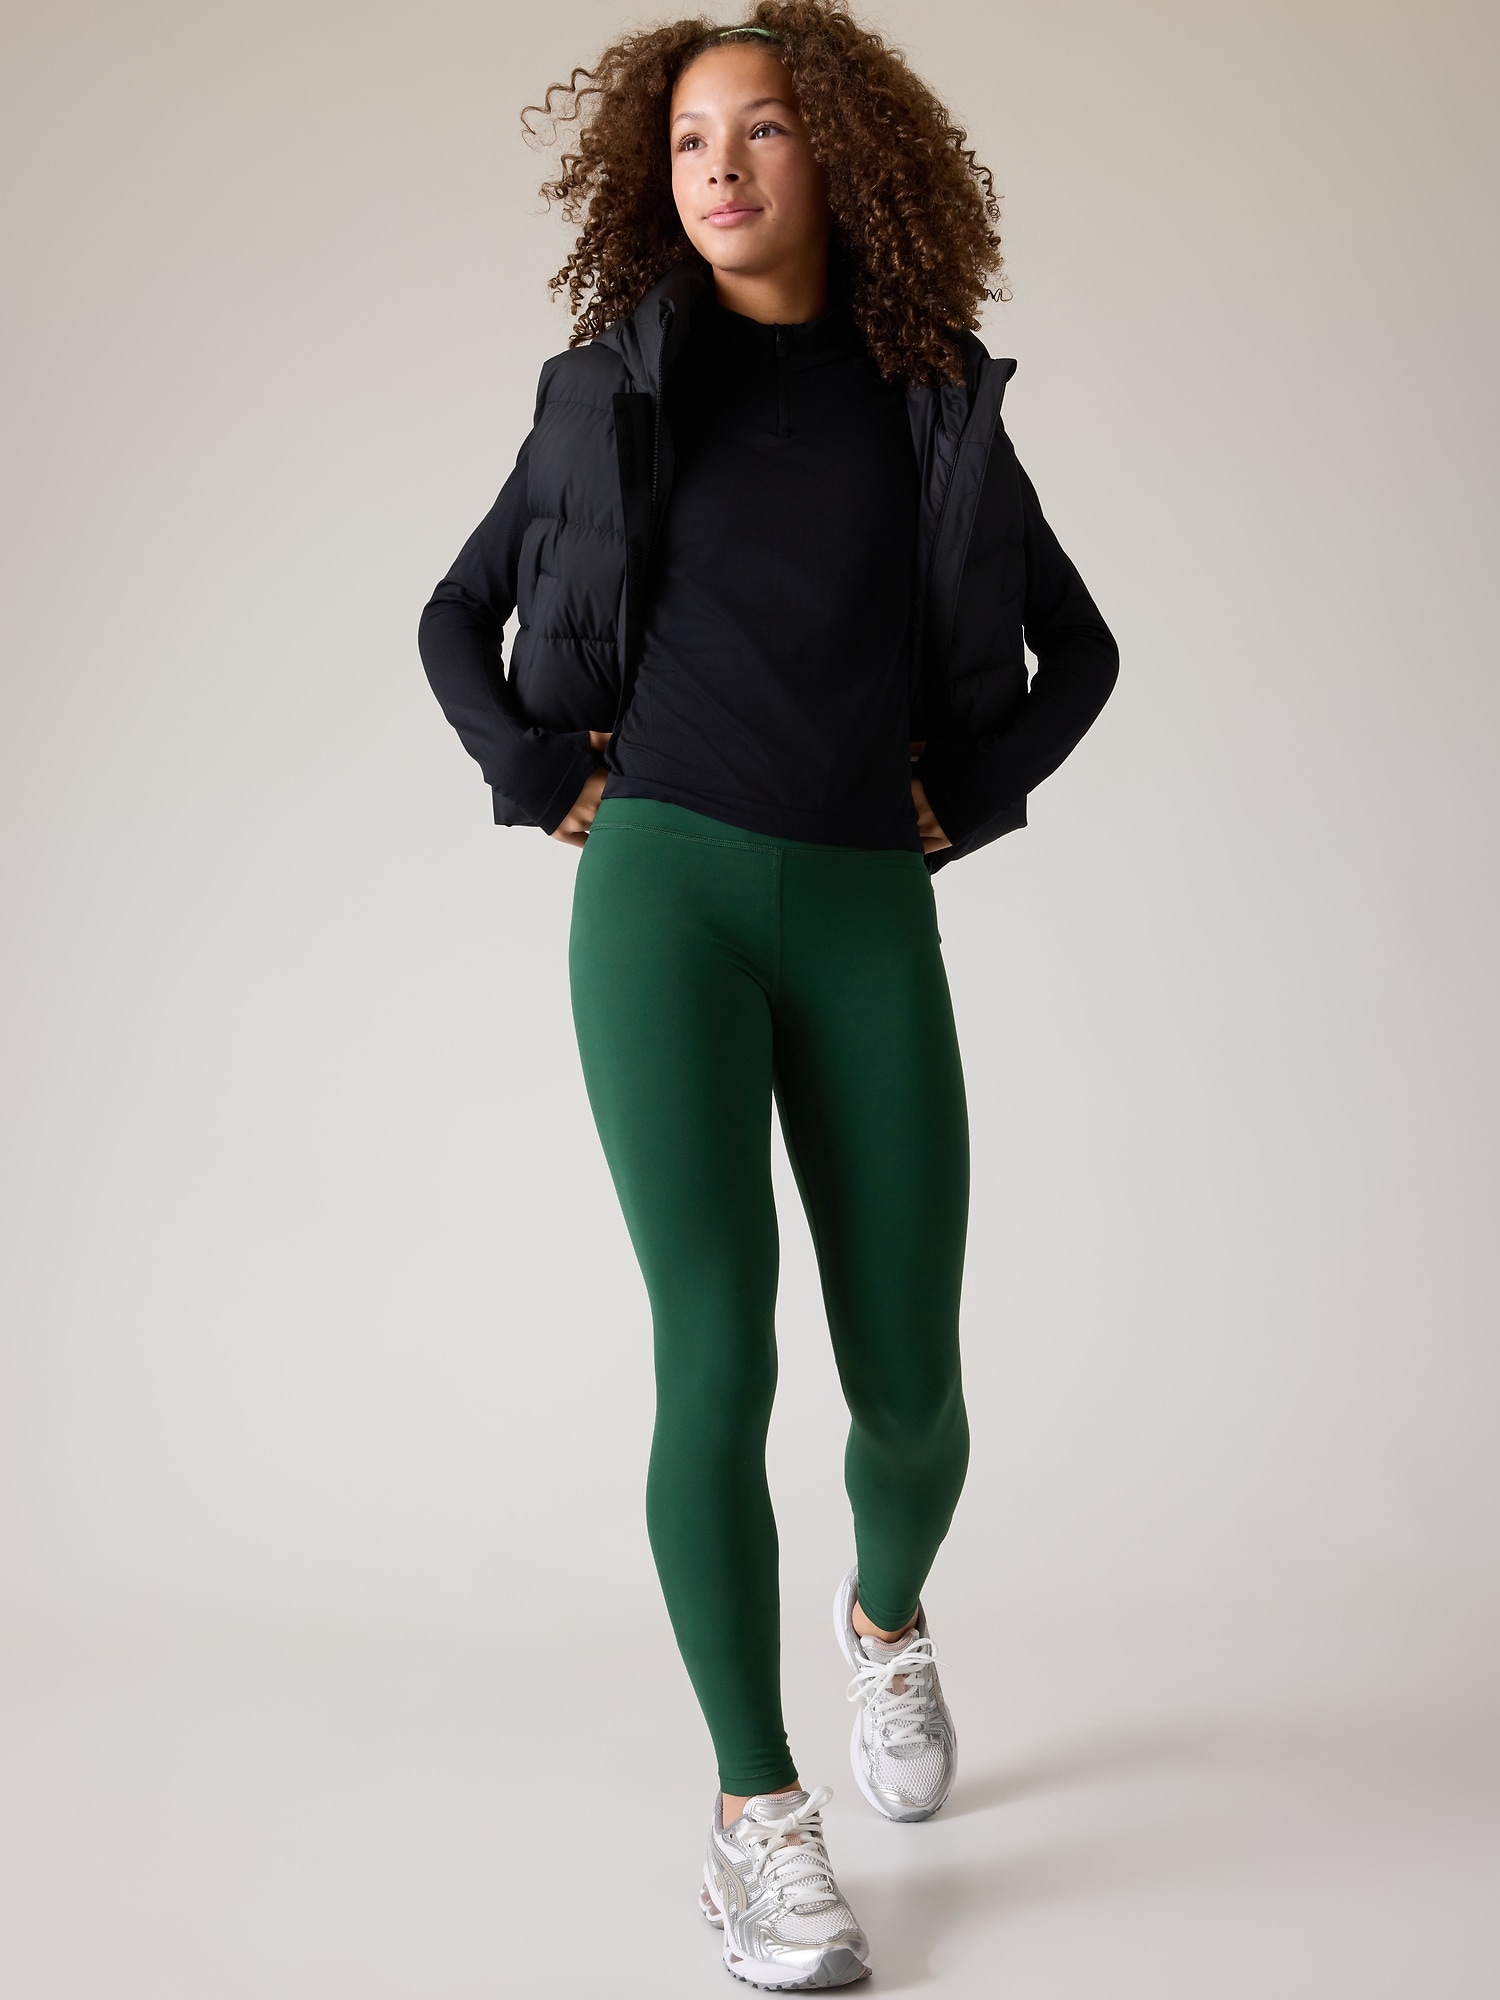 Shambhala Athleta leggings in black-Green